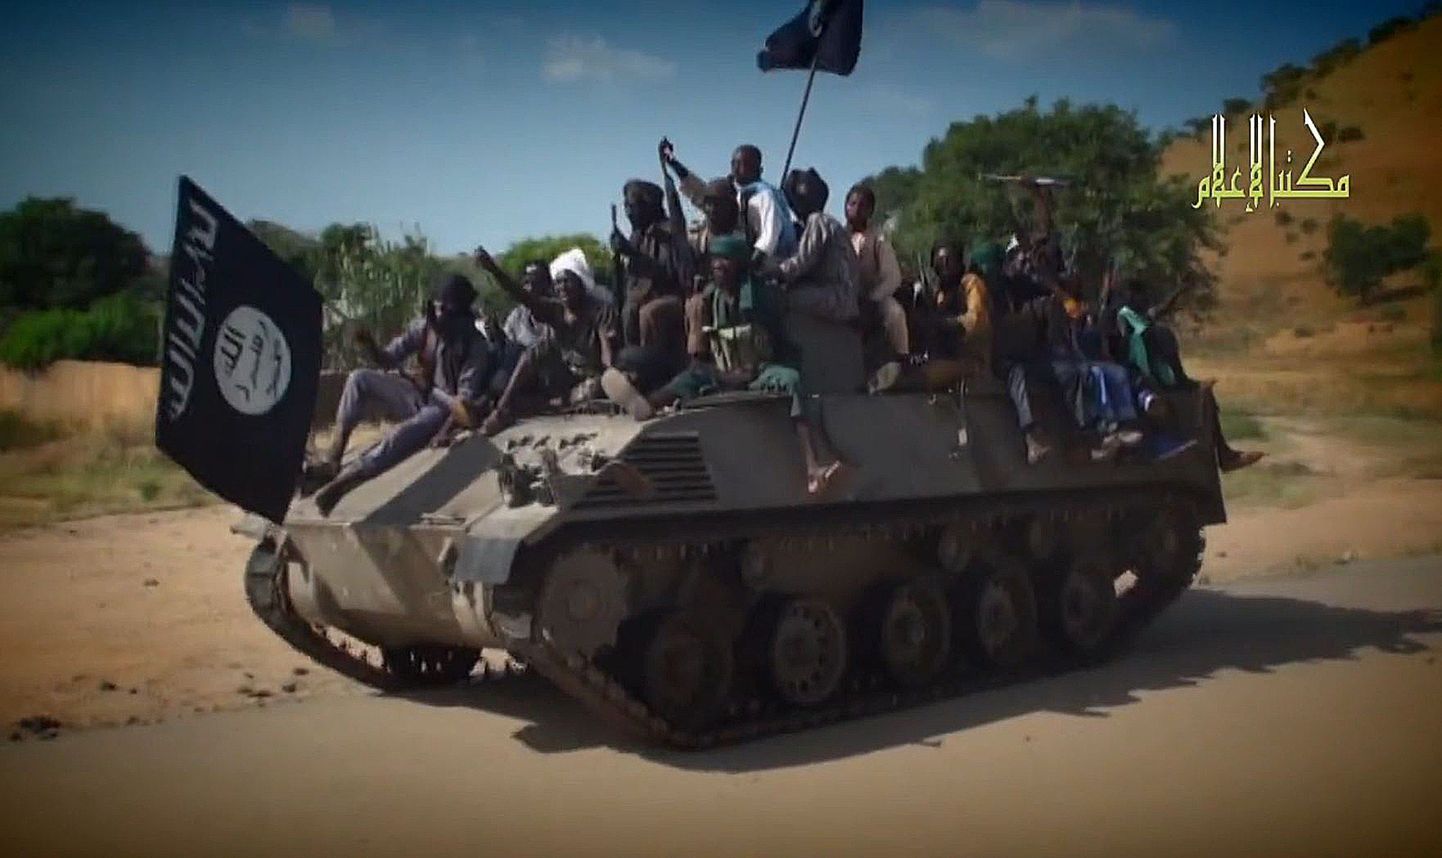 Boko Harami terrorirühmituse liikmed